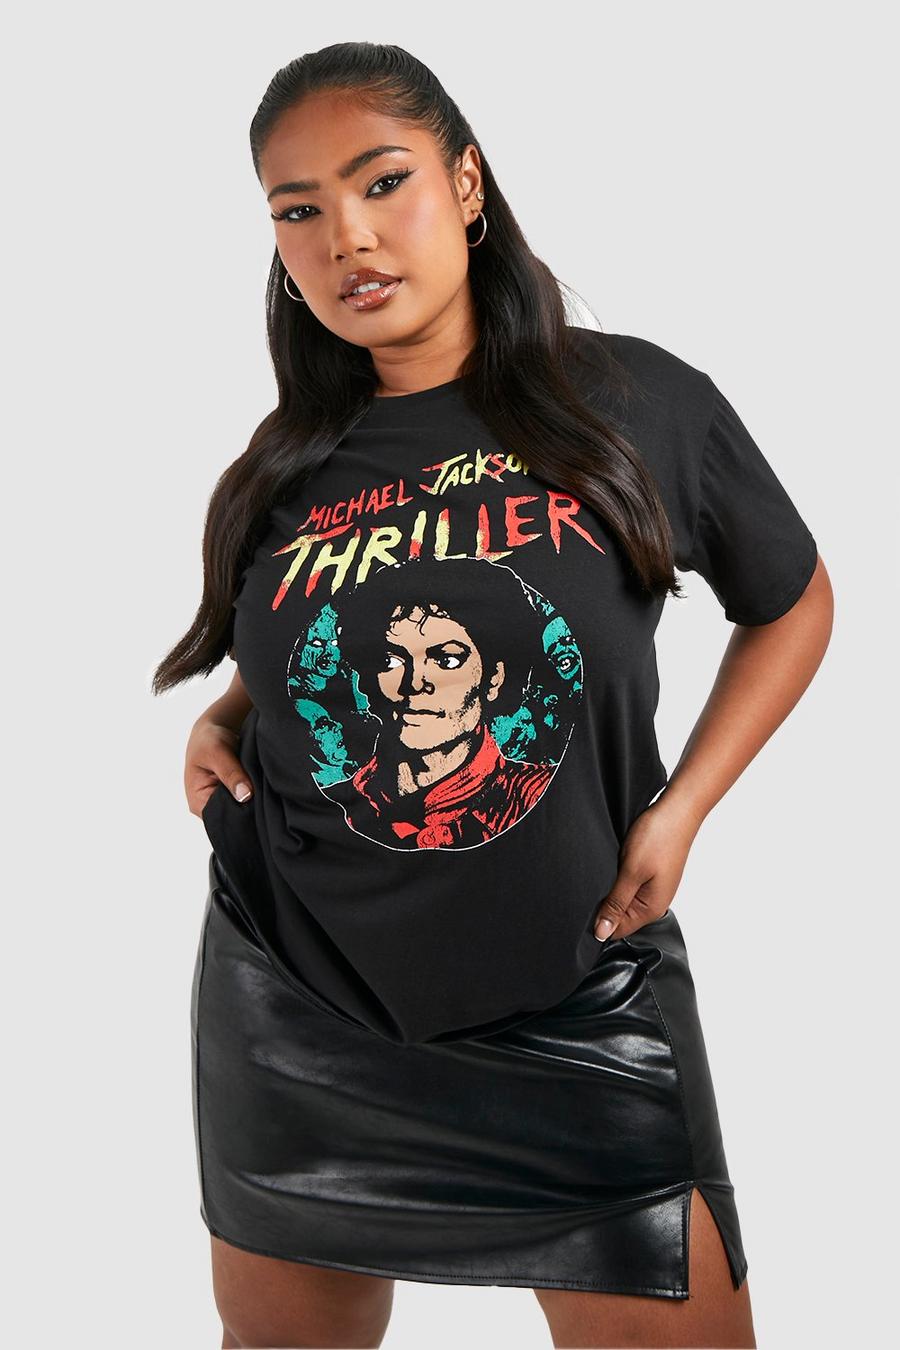 T-shirt Plus Size di Halloween ufficiale Michael Jackson, Black negro